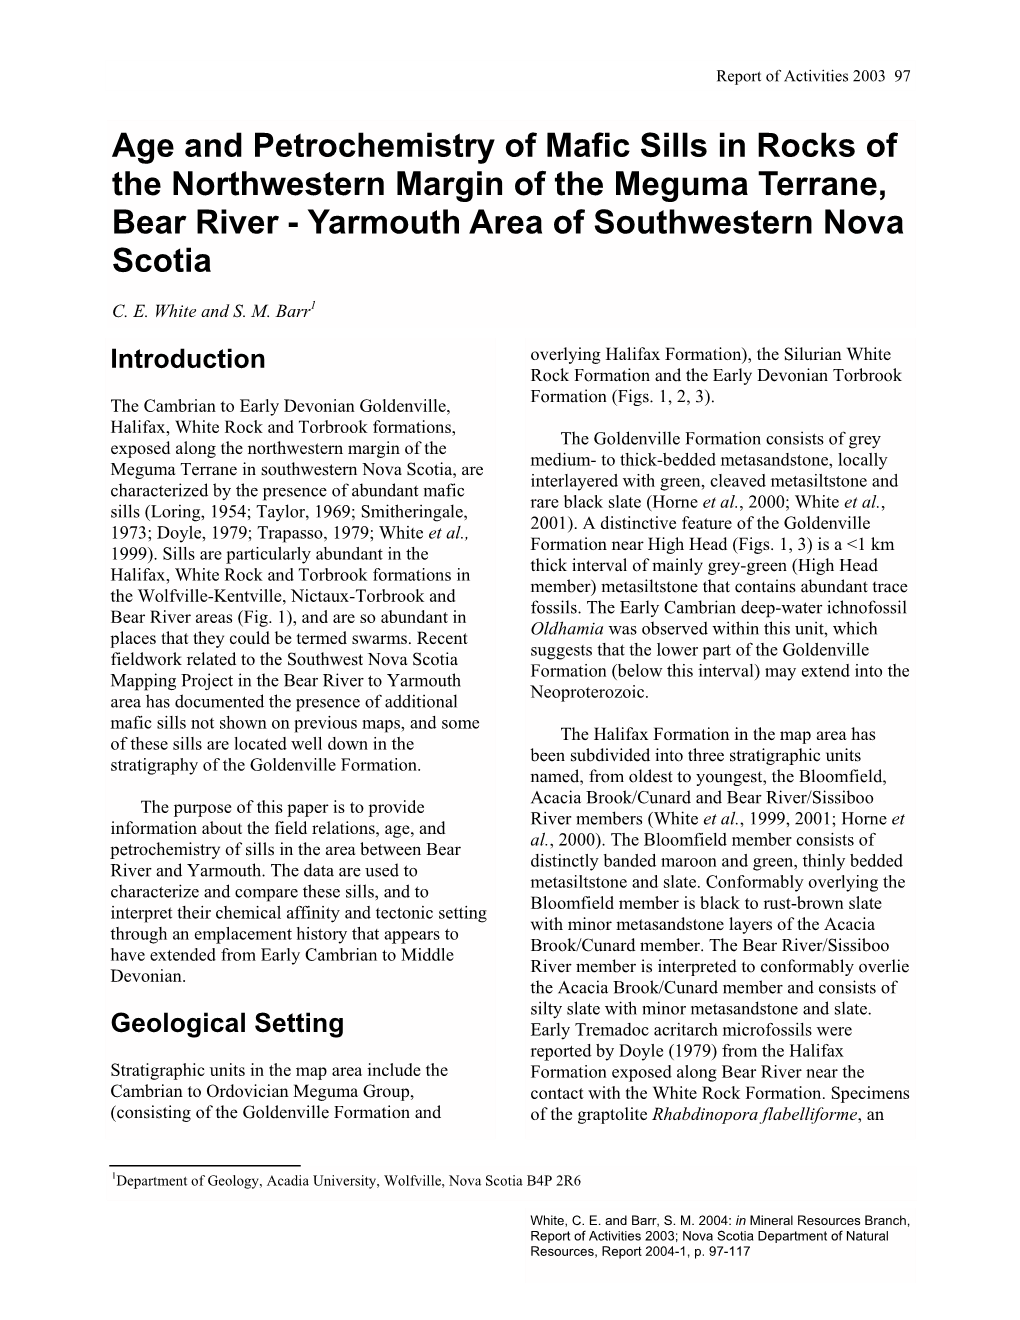 Age and Petrochemistry of Mafic Sills in Rocks of the Northwestern Margin of the Meguma Terrane, Bear River - Yarmouth Area of Southwestern Nova Scotia